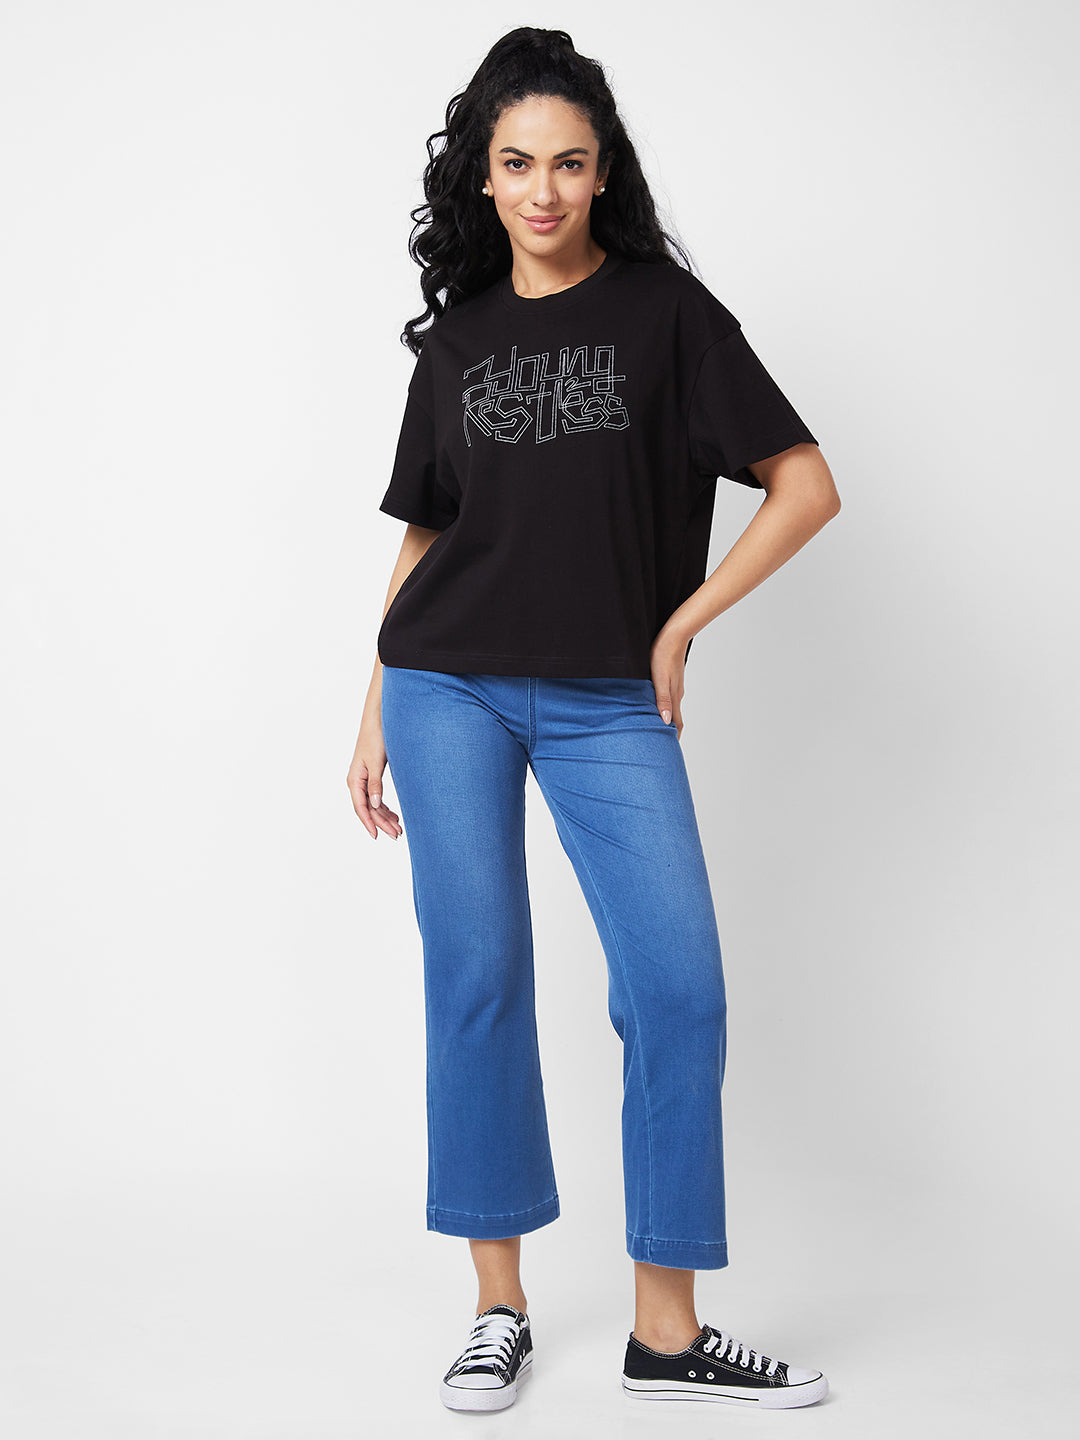 Spykar Round Neck Half Sleeves Black T-shirt  For Women